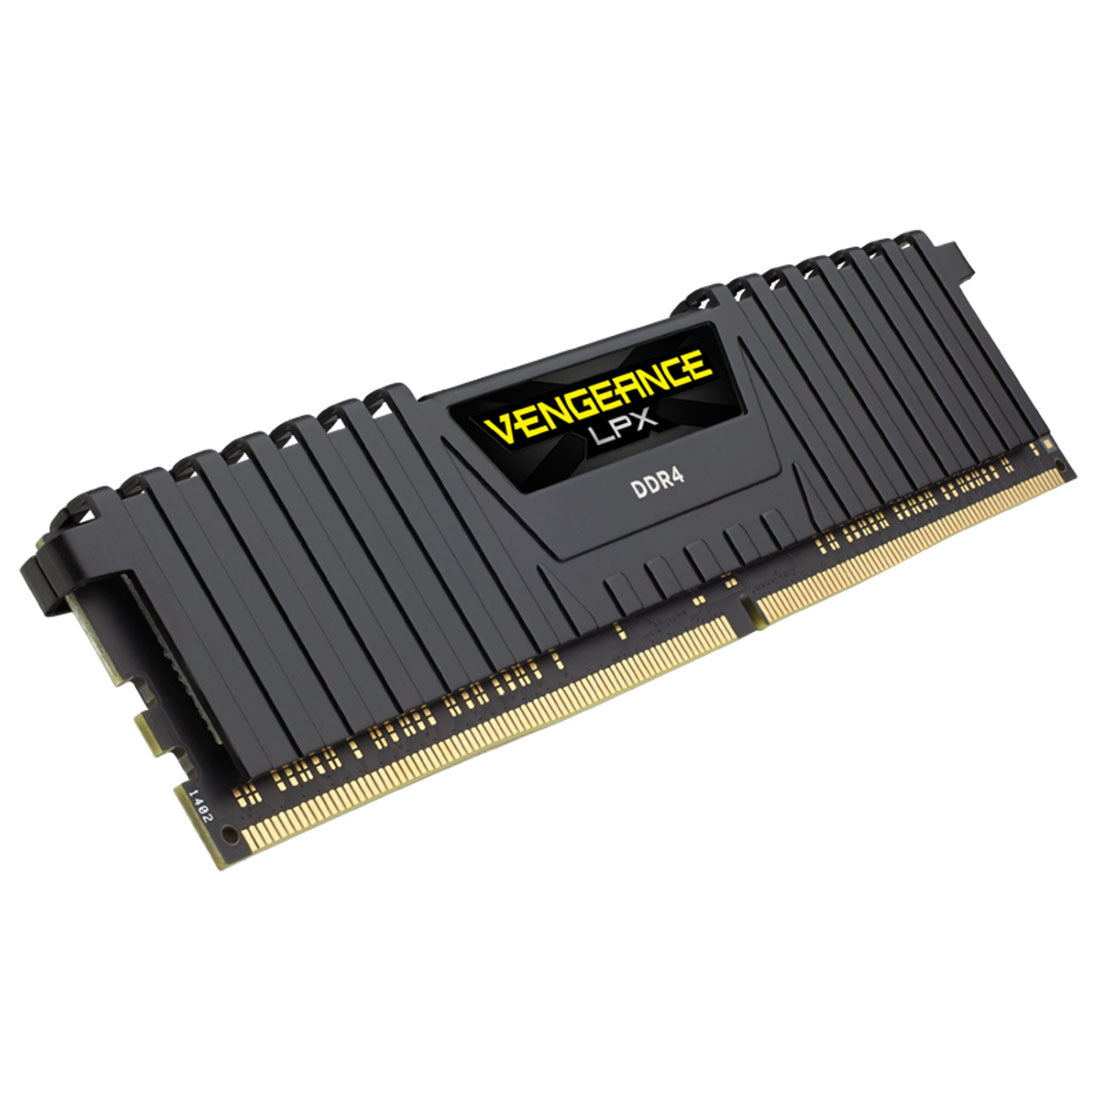 Corsair Vengeance LPX RAM 16GB DDR4 RAM 3200MHz डेस्कटॉप मेमोरी